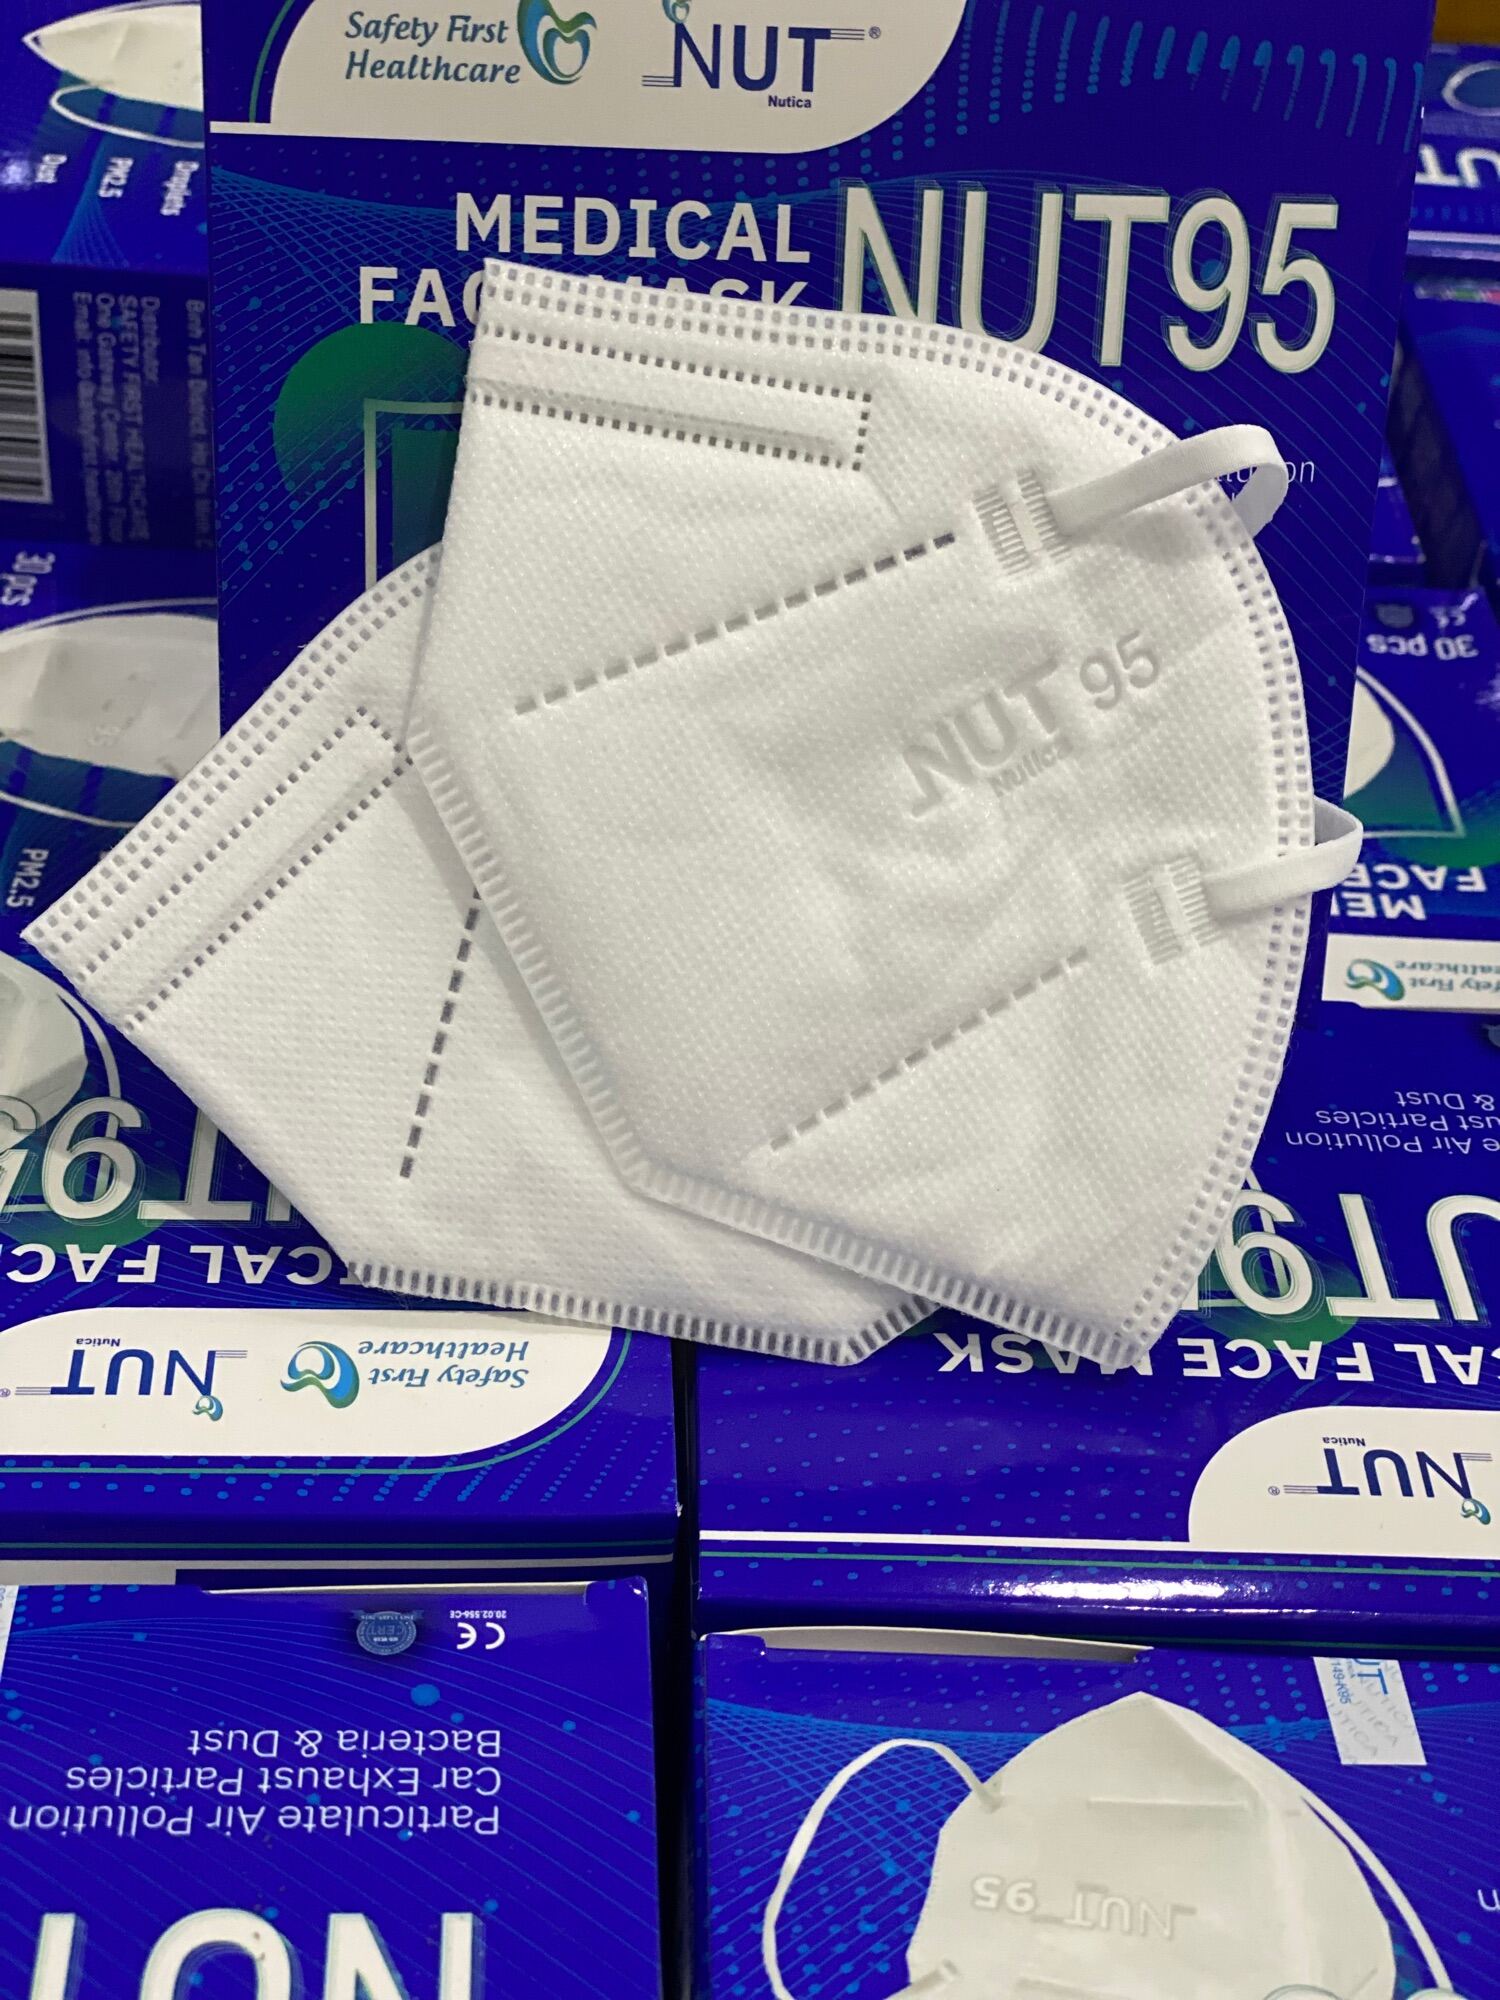 Combo 10 khẩu trang Nut95 - Khẩu trang y tế kháng khuẩn 5 lớp N95 - Khẩu trang y tế kháng khuẩn cao cấp